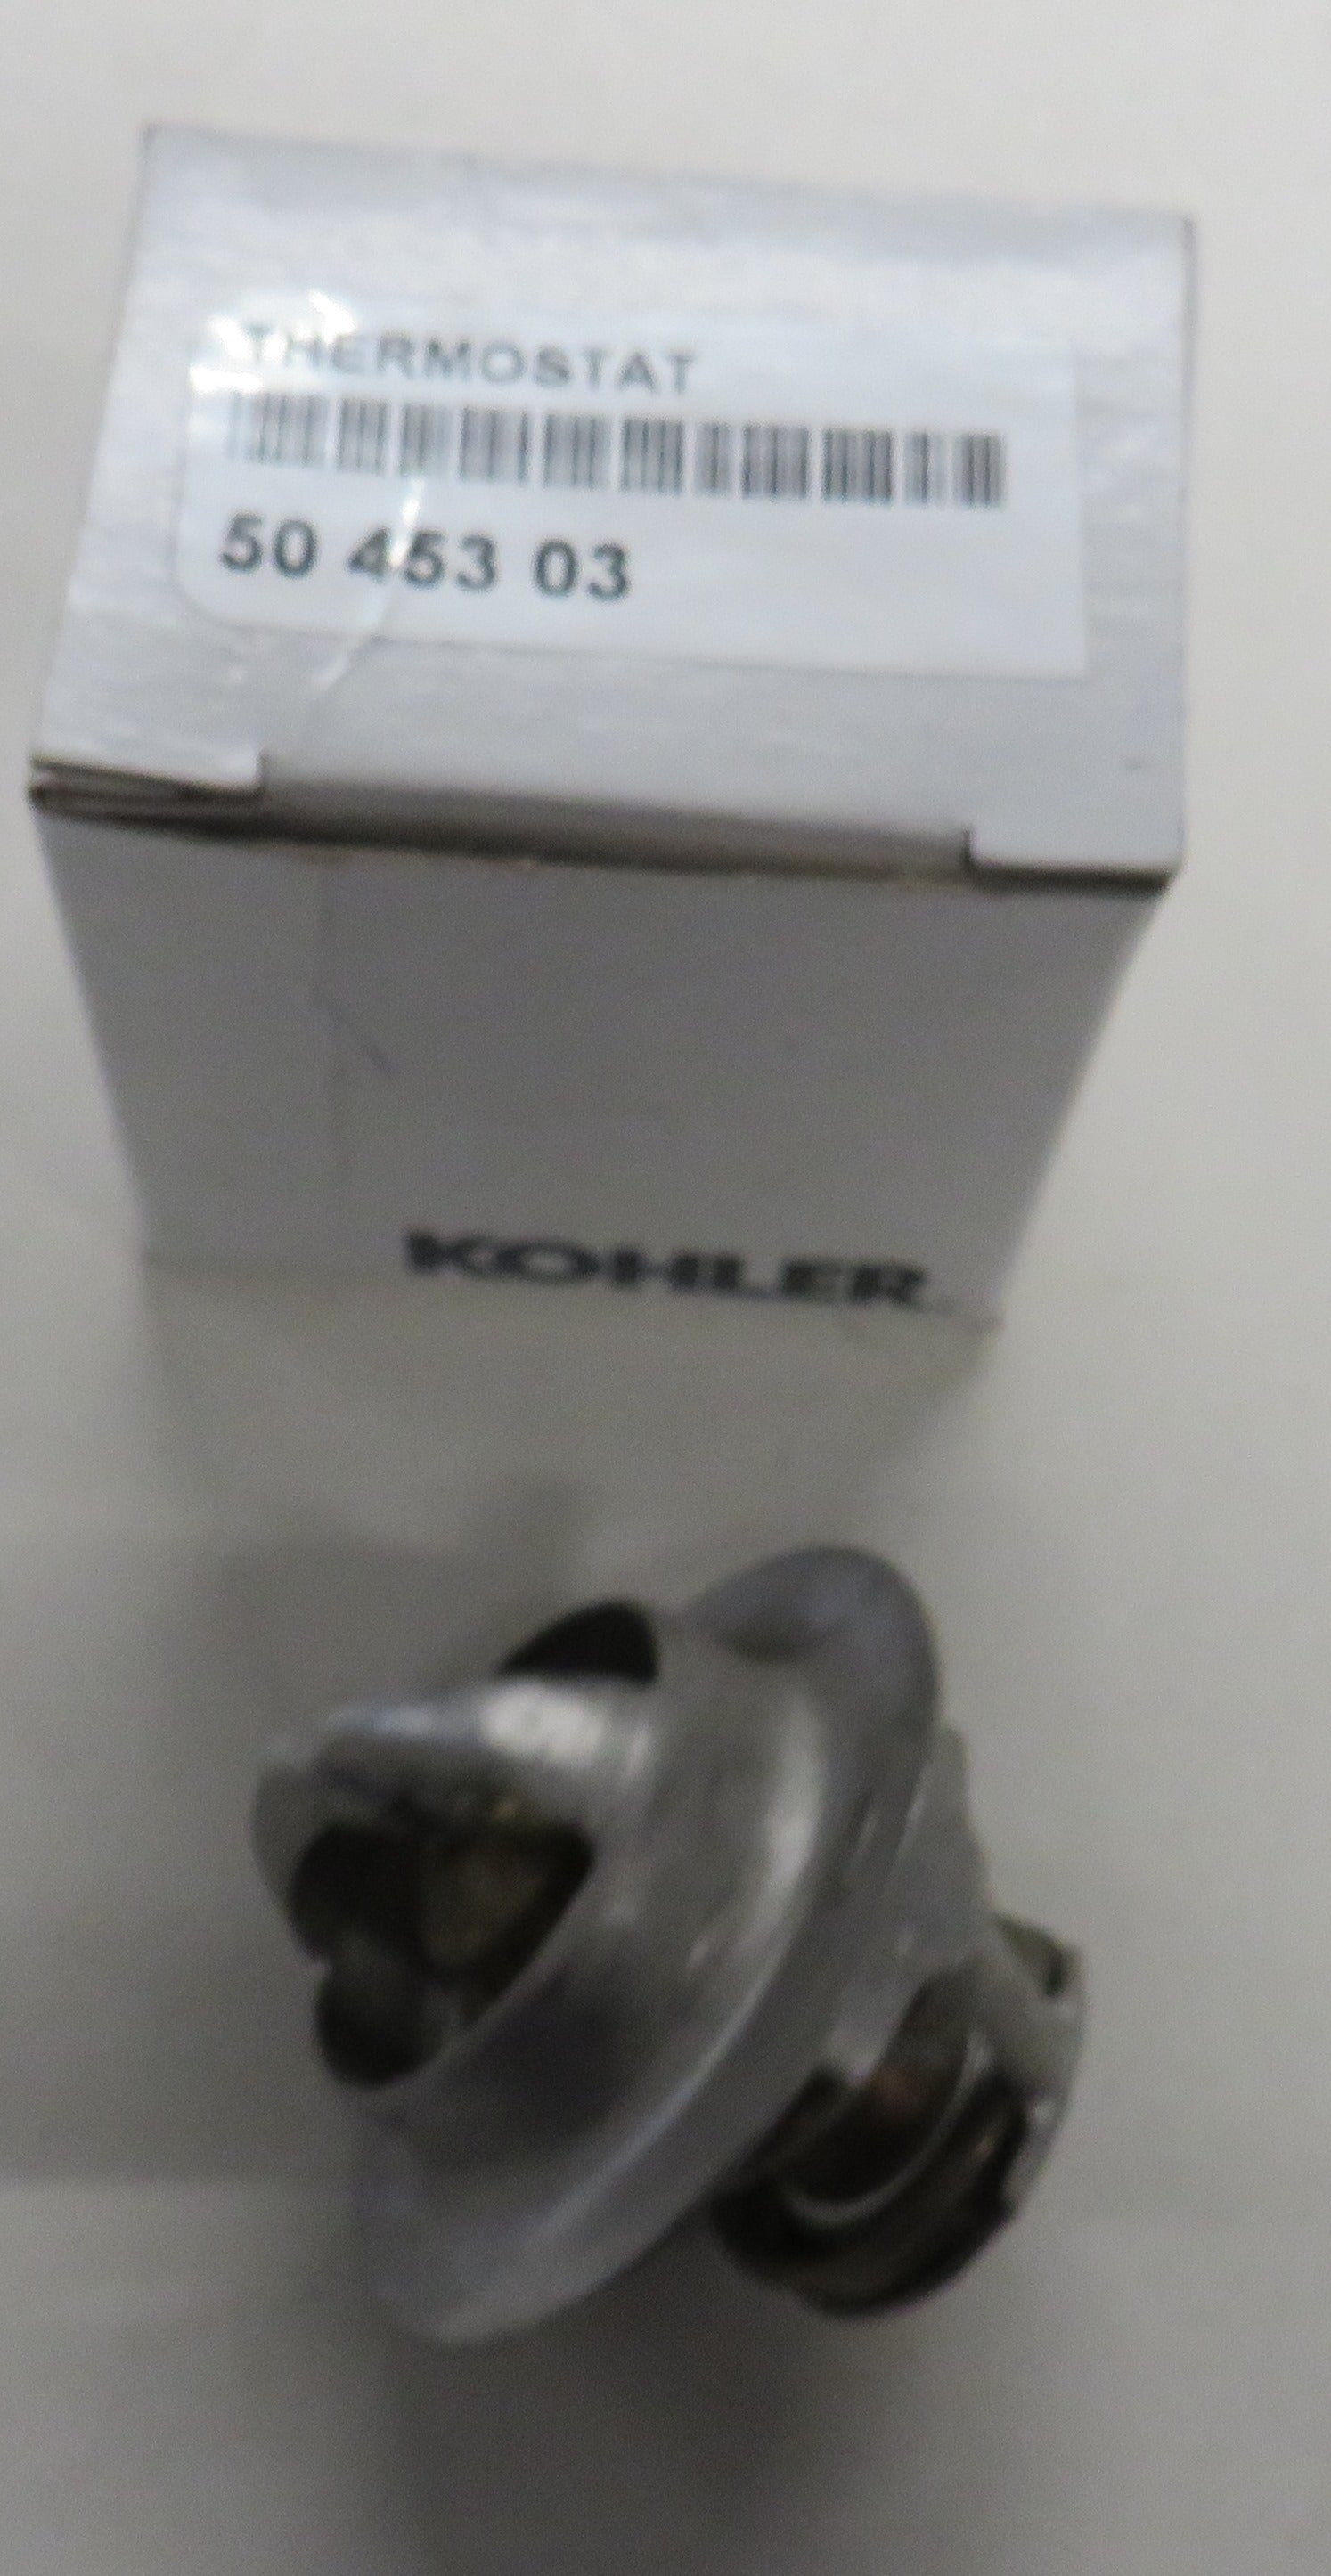 Kohler Thermostat 50 453 03 Marine 140 Degree (Part of Kohler 50 755 17 Kit, this as kit is OBSOLETE and no longer available)